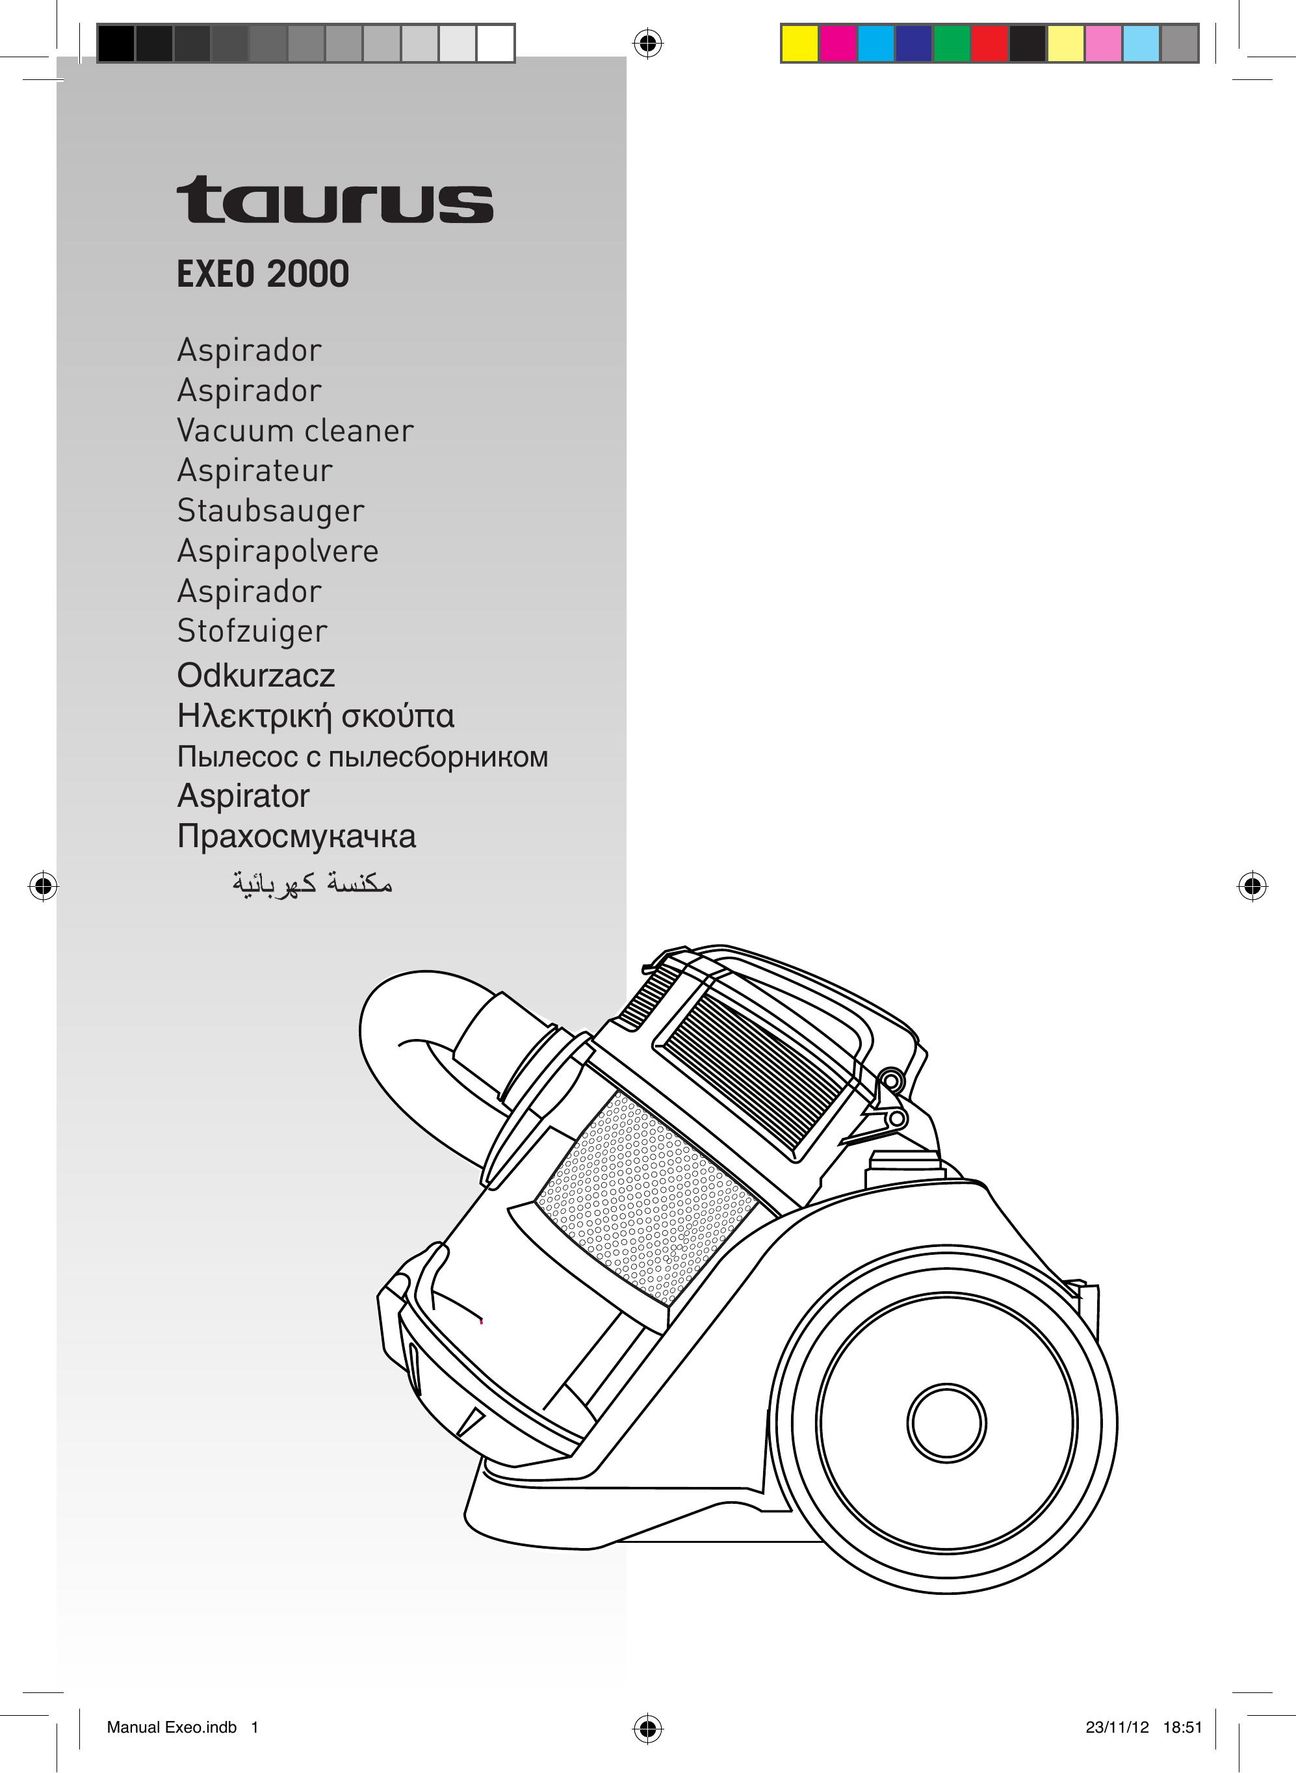 Taurus Group EXEO 2000 Vacuum Cleaner User Manual